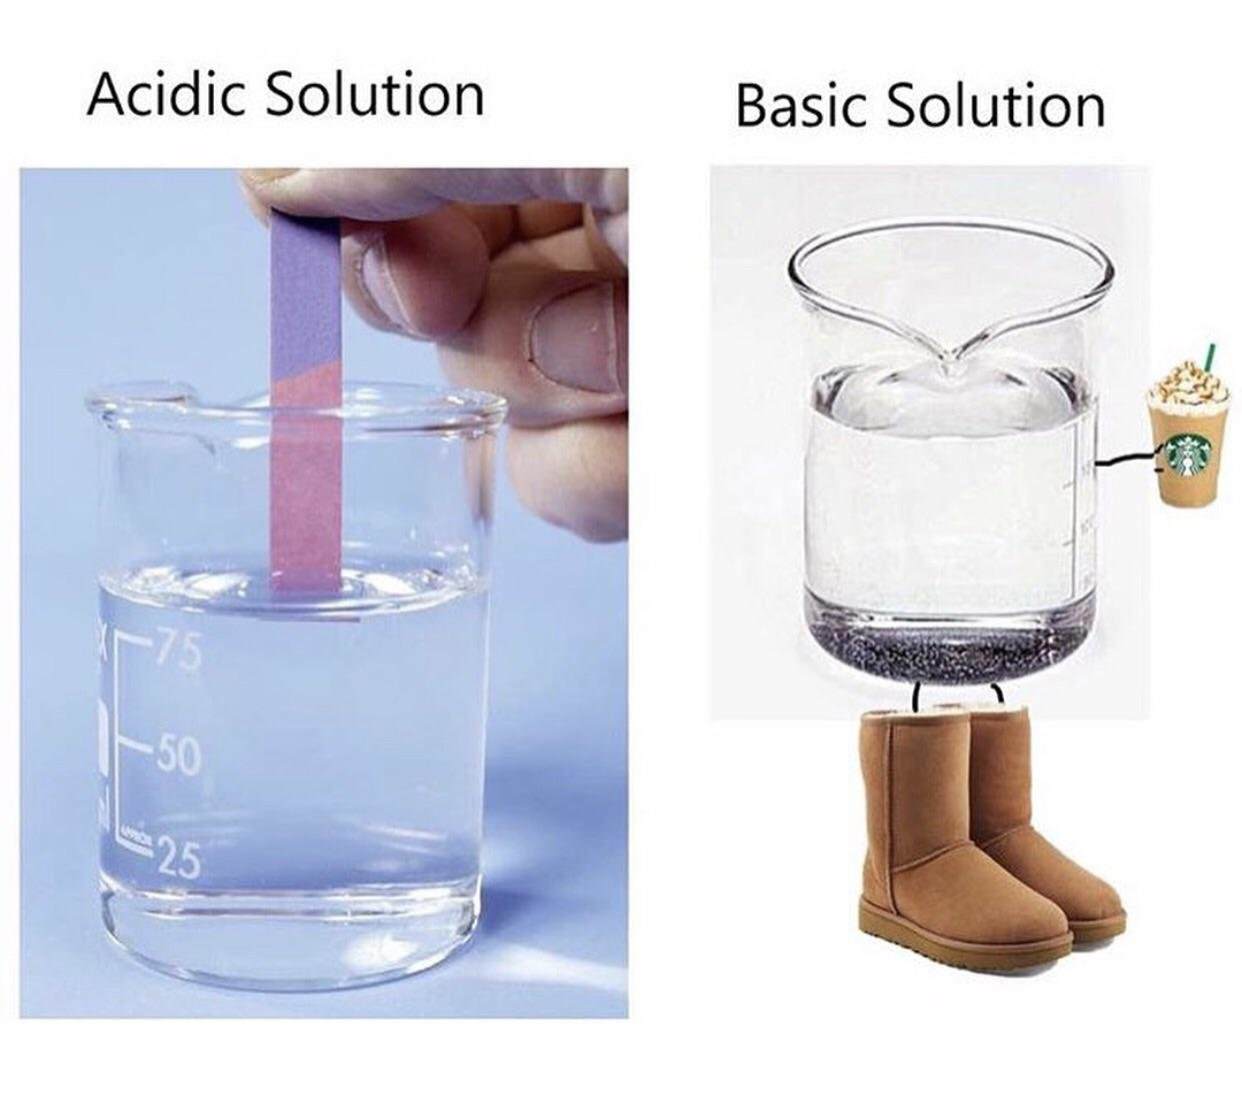 meme stream - acidic solution basic solution - Acidic Solution Basic Solution 25